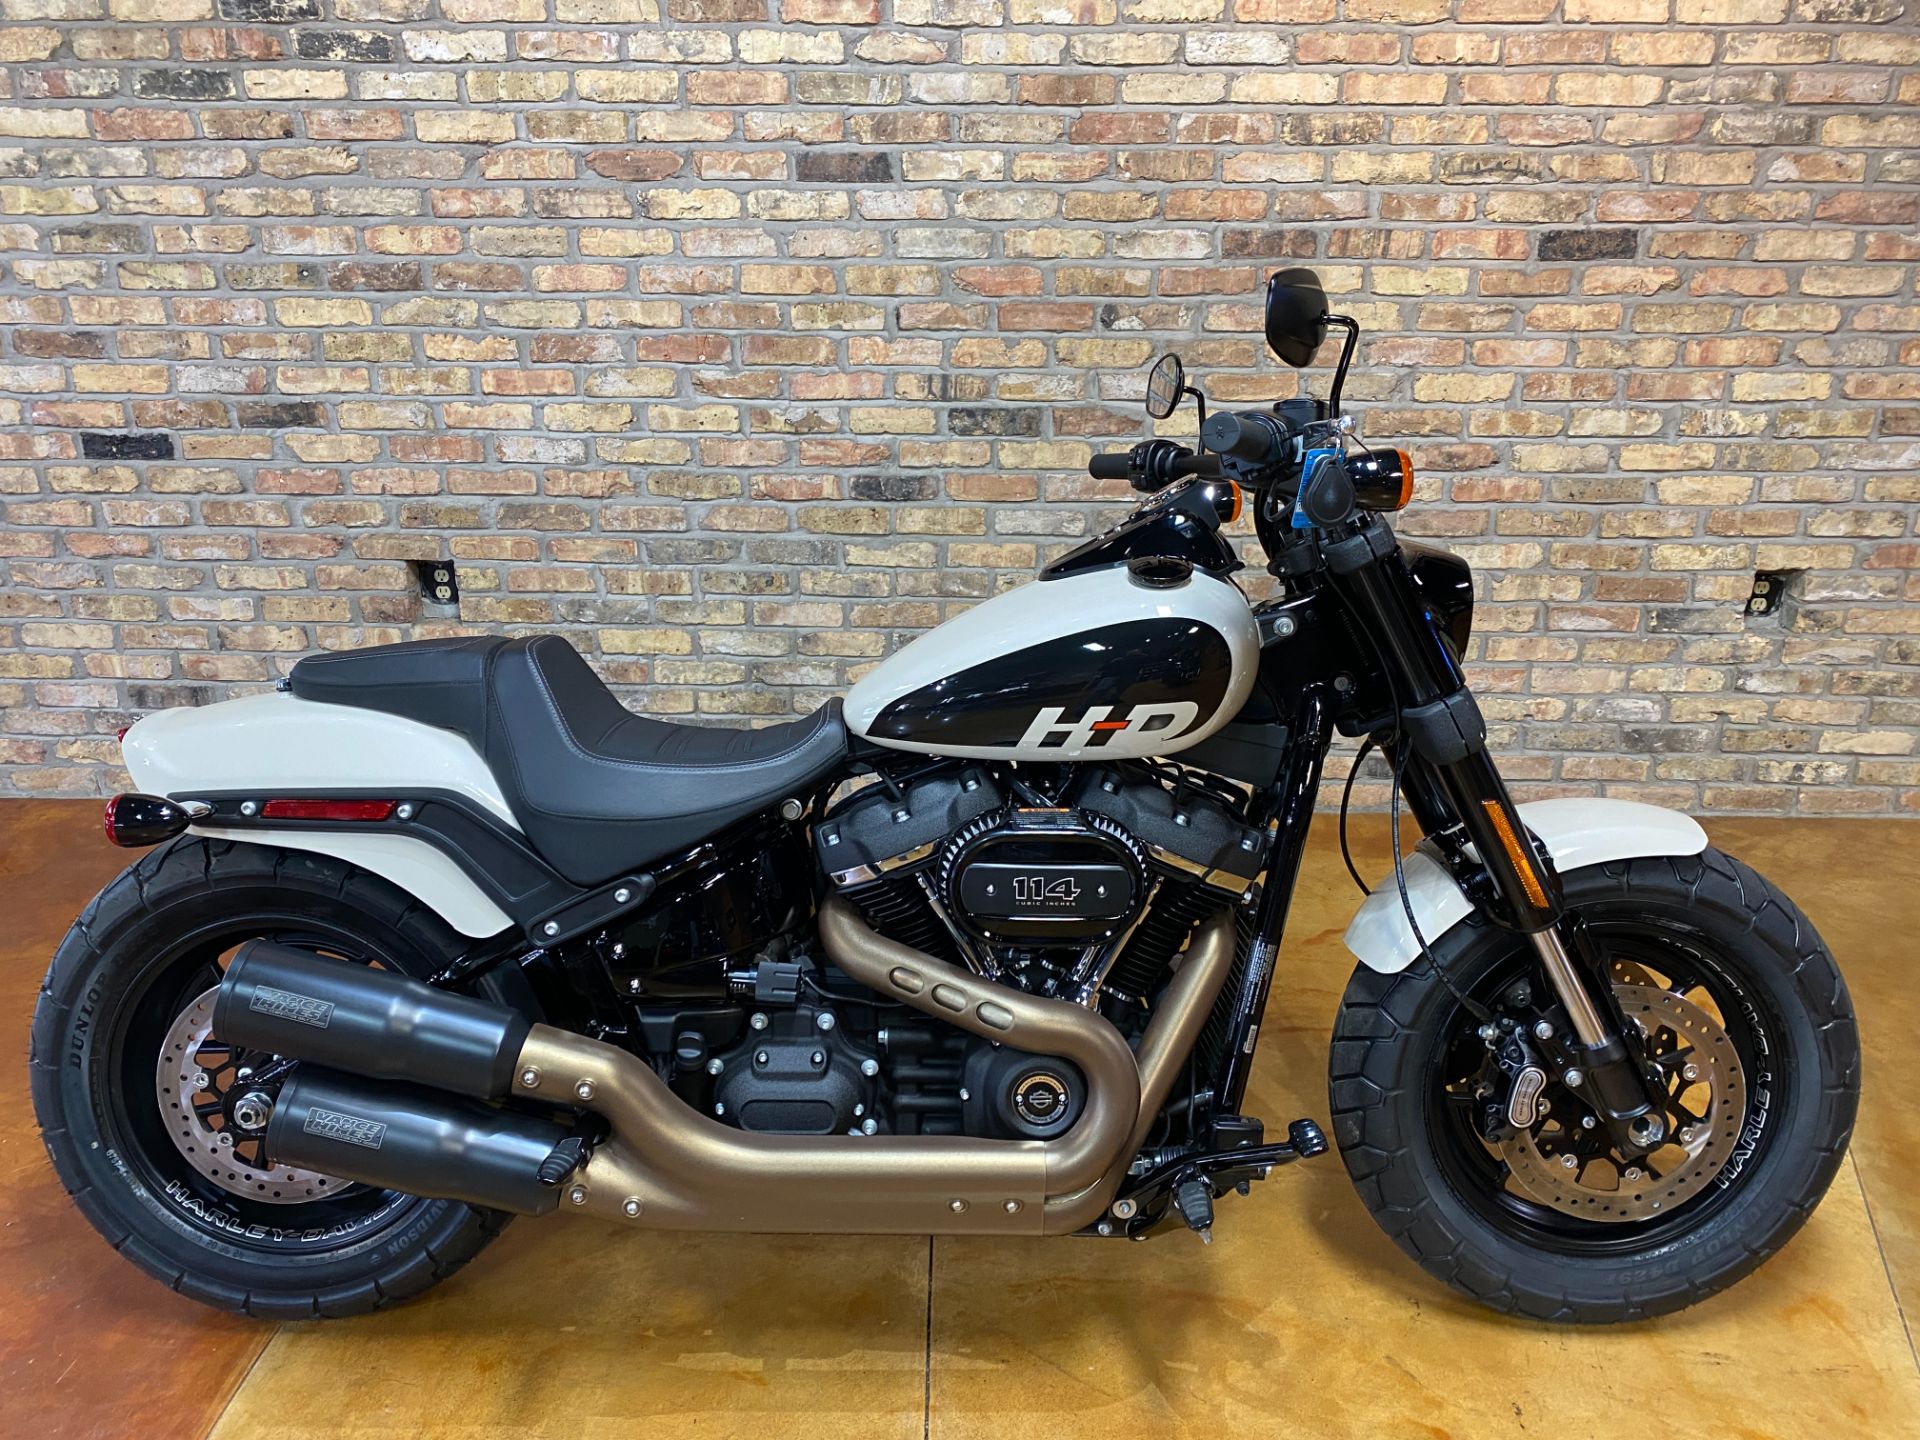 2022 Harley-Davidson Fat Bob® 114 in Big Bend, Wisconsin - Photo 3